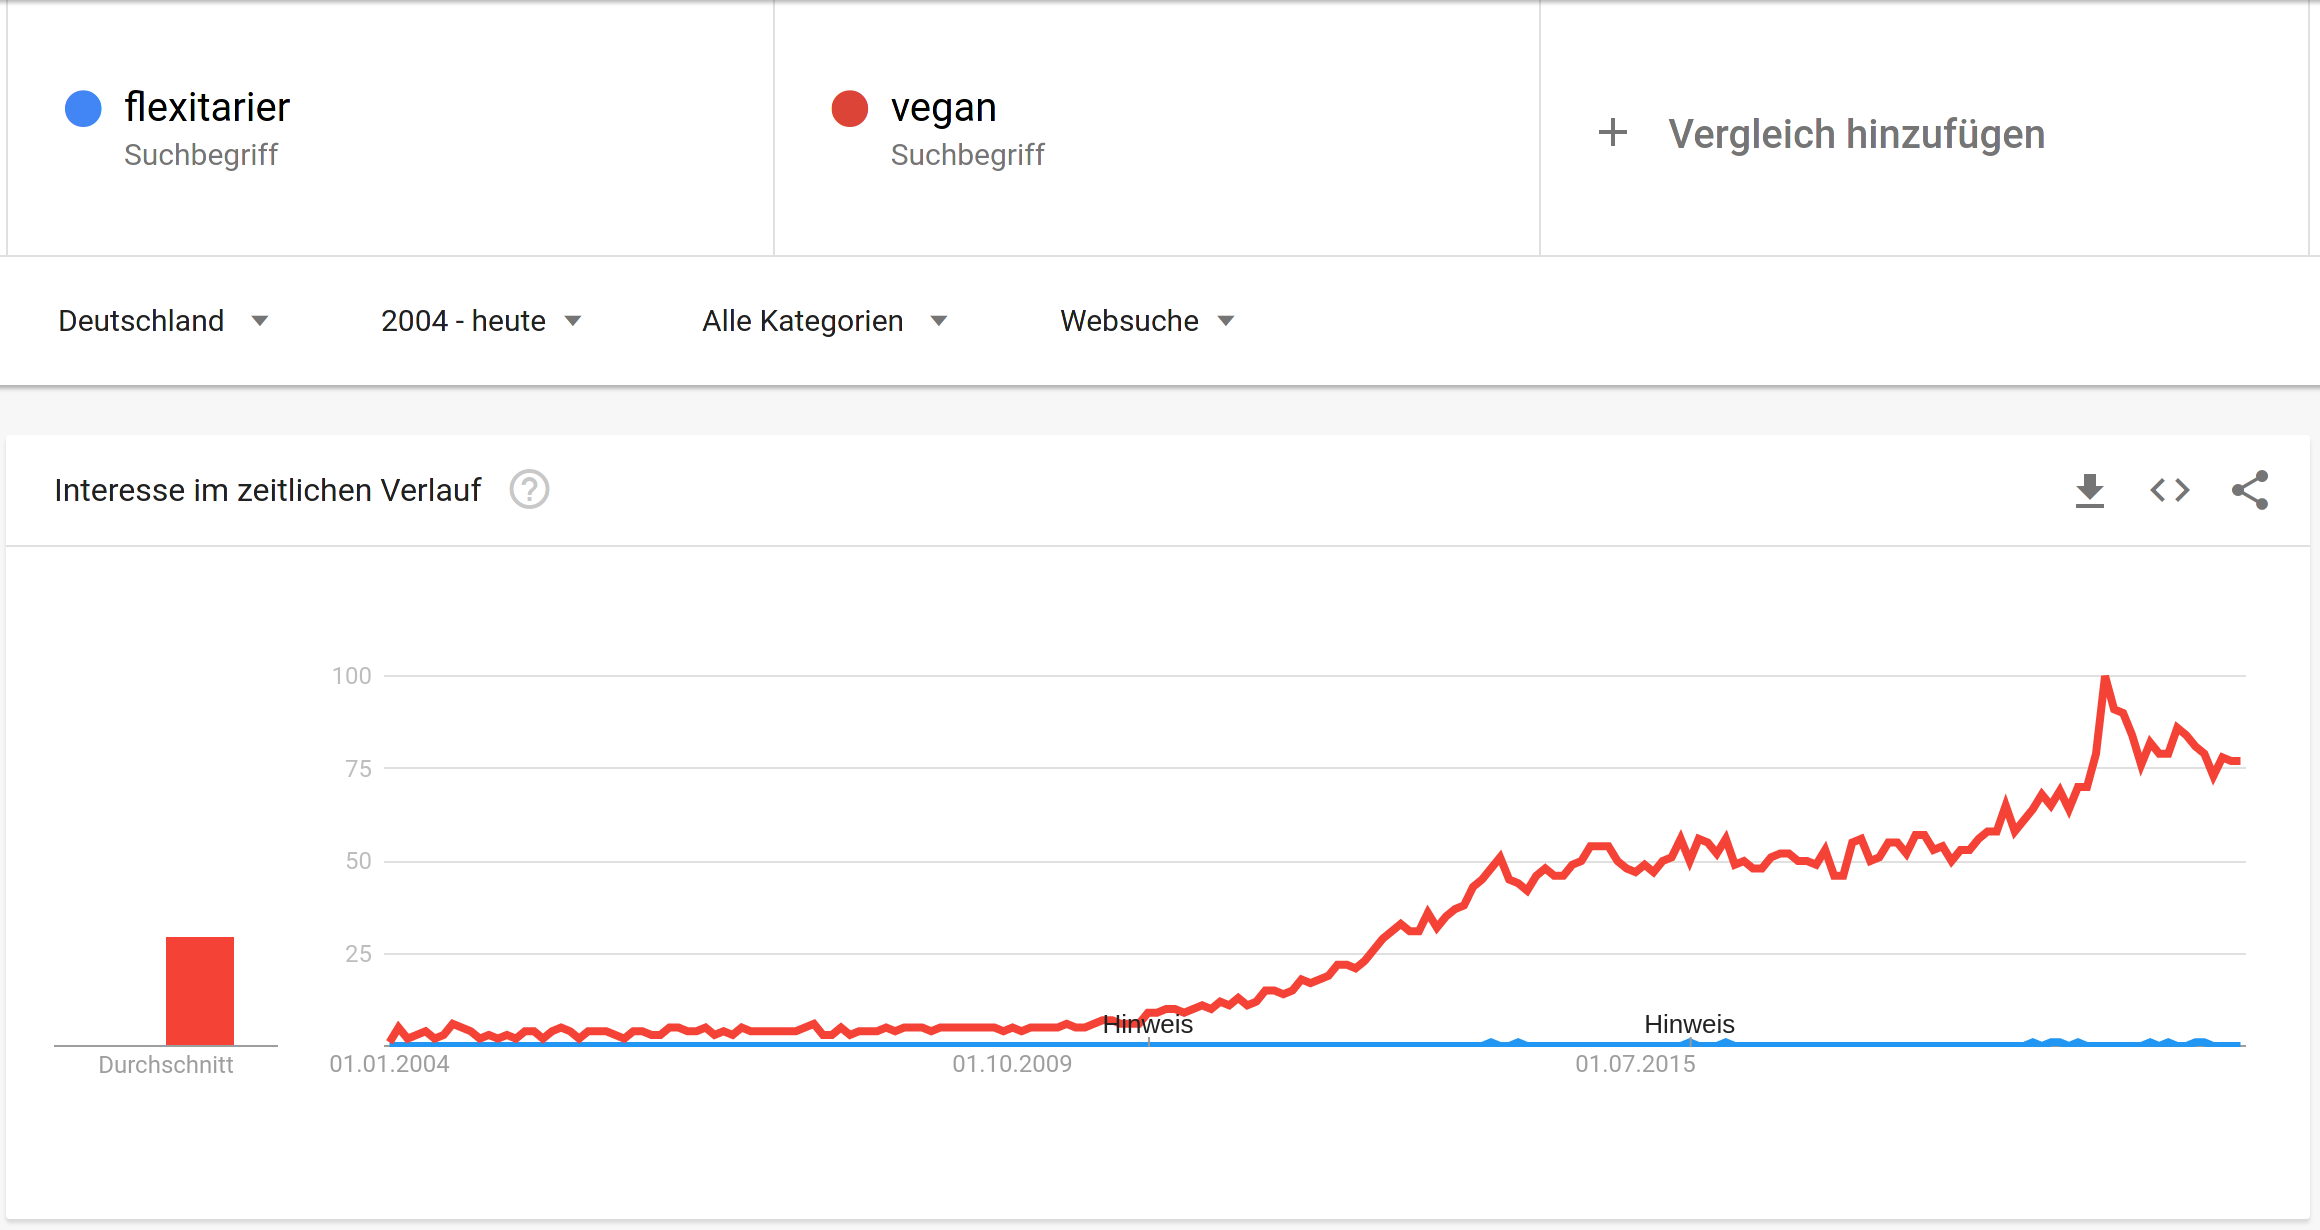 google trends flexitarier vegan vergleich